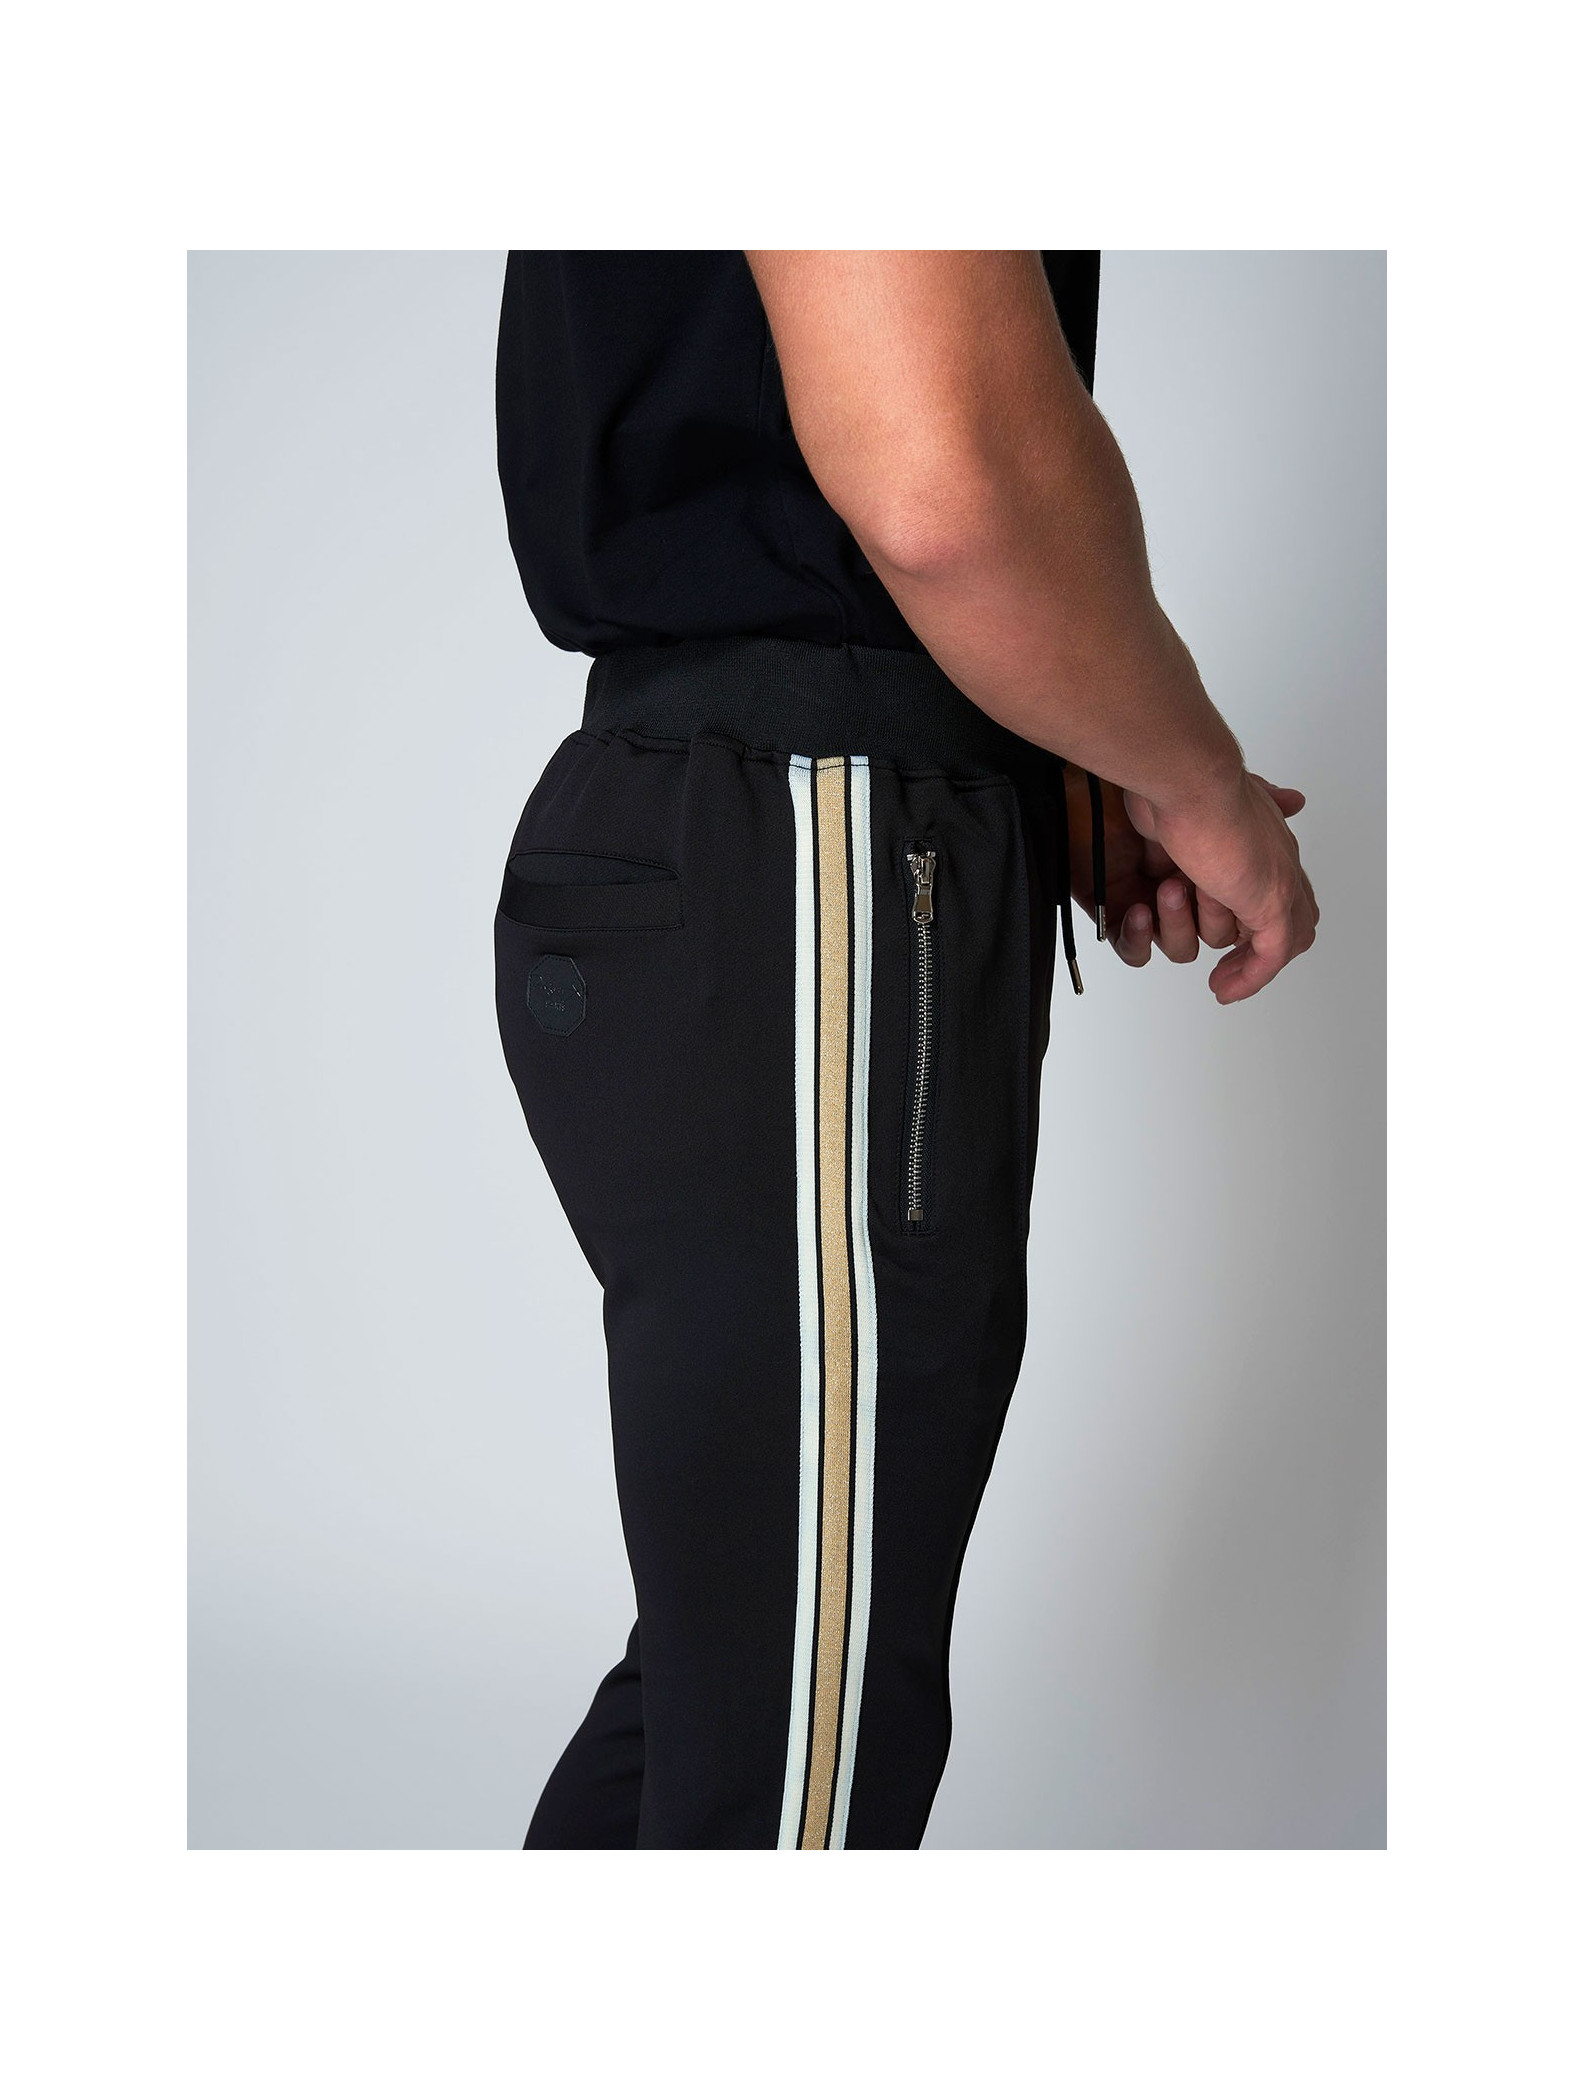 Joggers pants with gold stripes Project X Paris